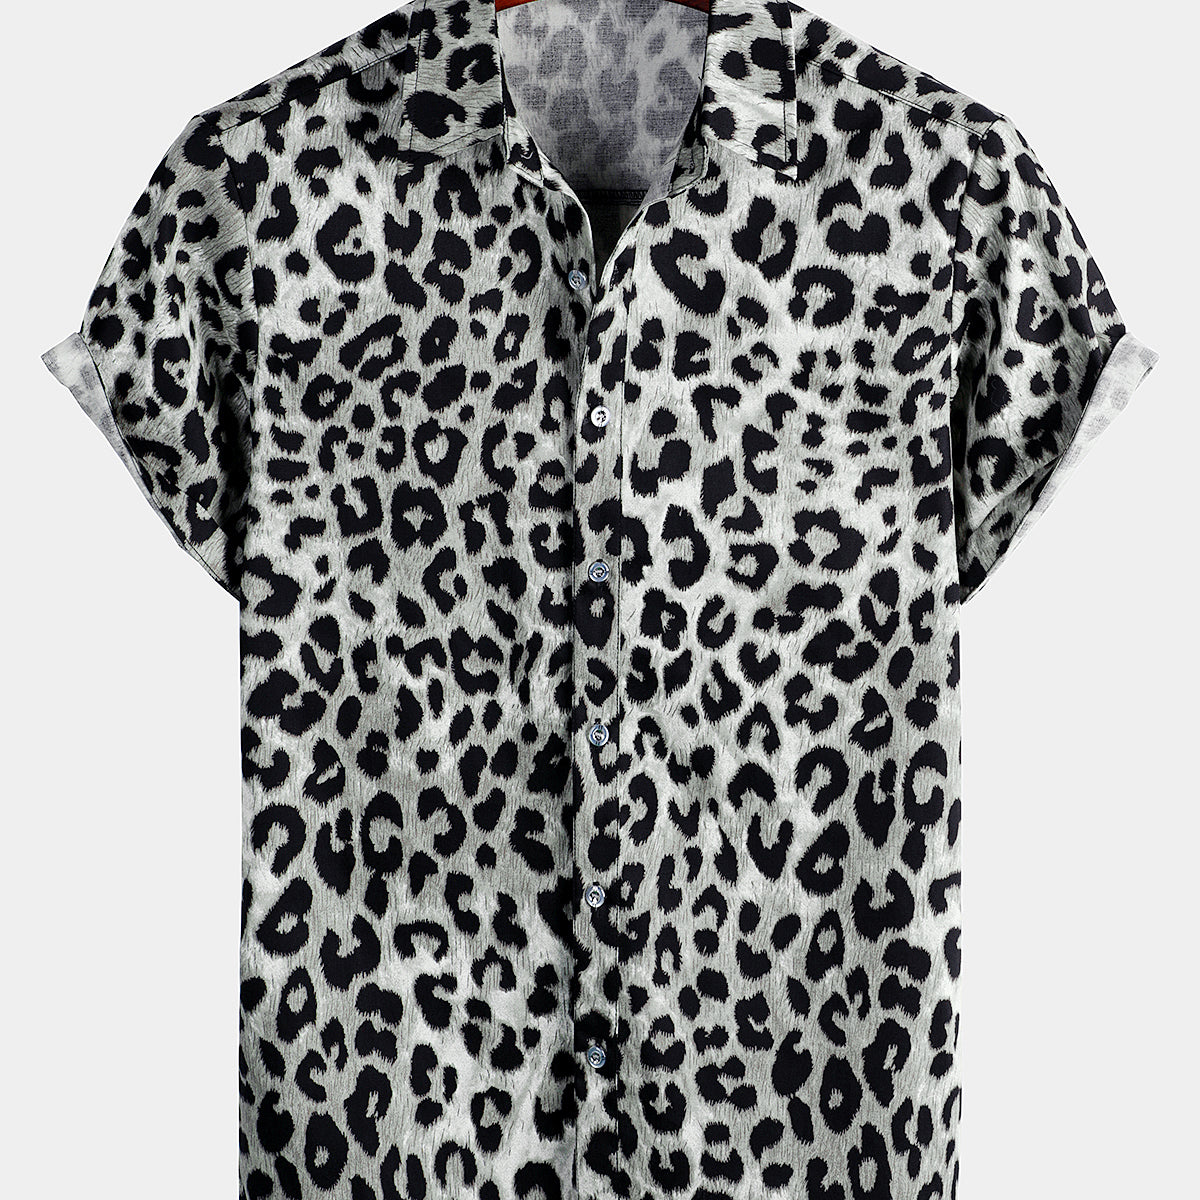 Men's Cotton Casual Leopard-Print Short Sleeve Shirt